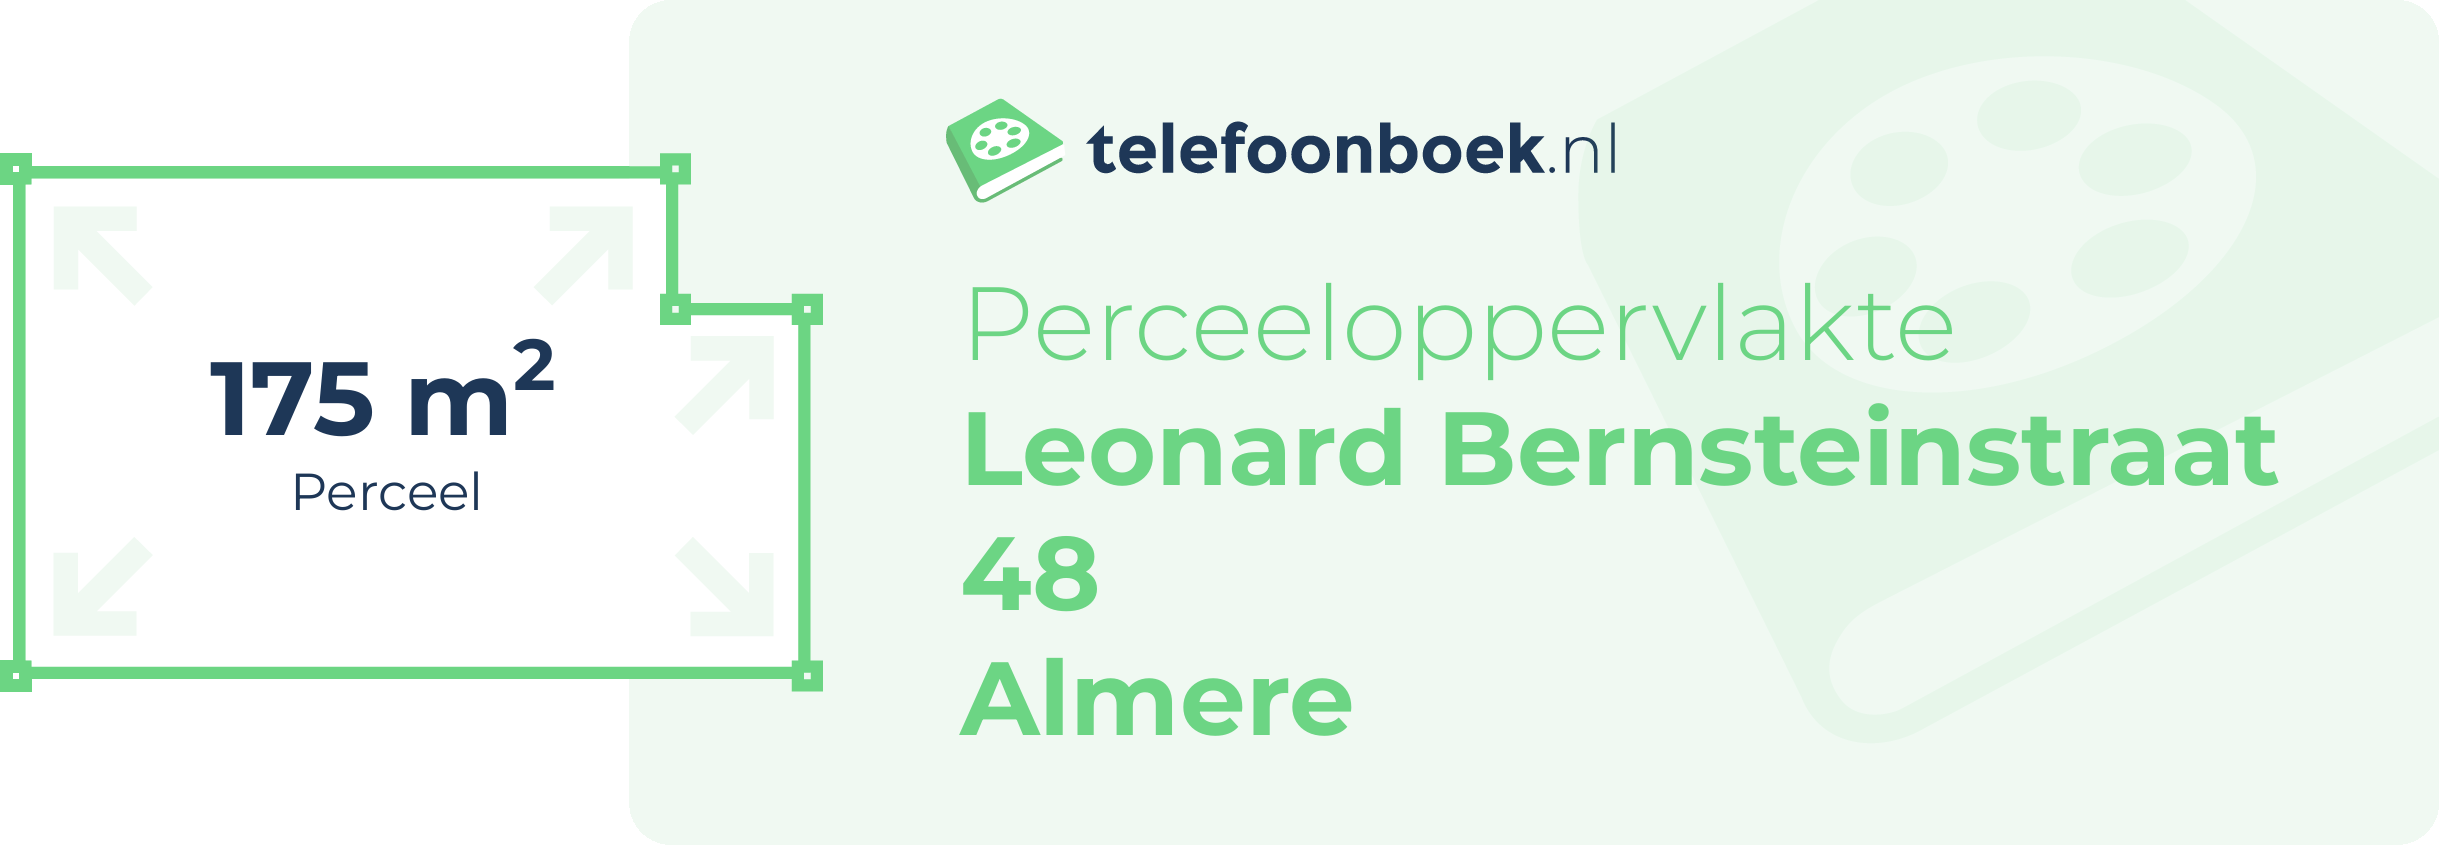 Perceeloppervlakte Leonard Bernsteinstraat 48 Almere